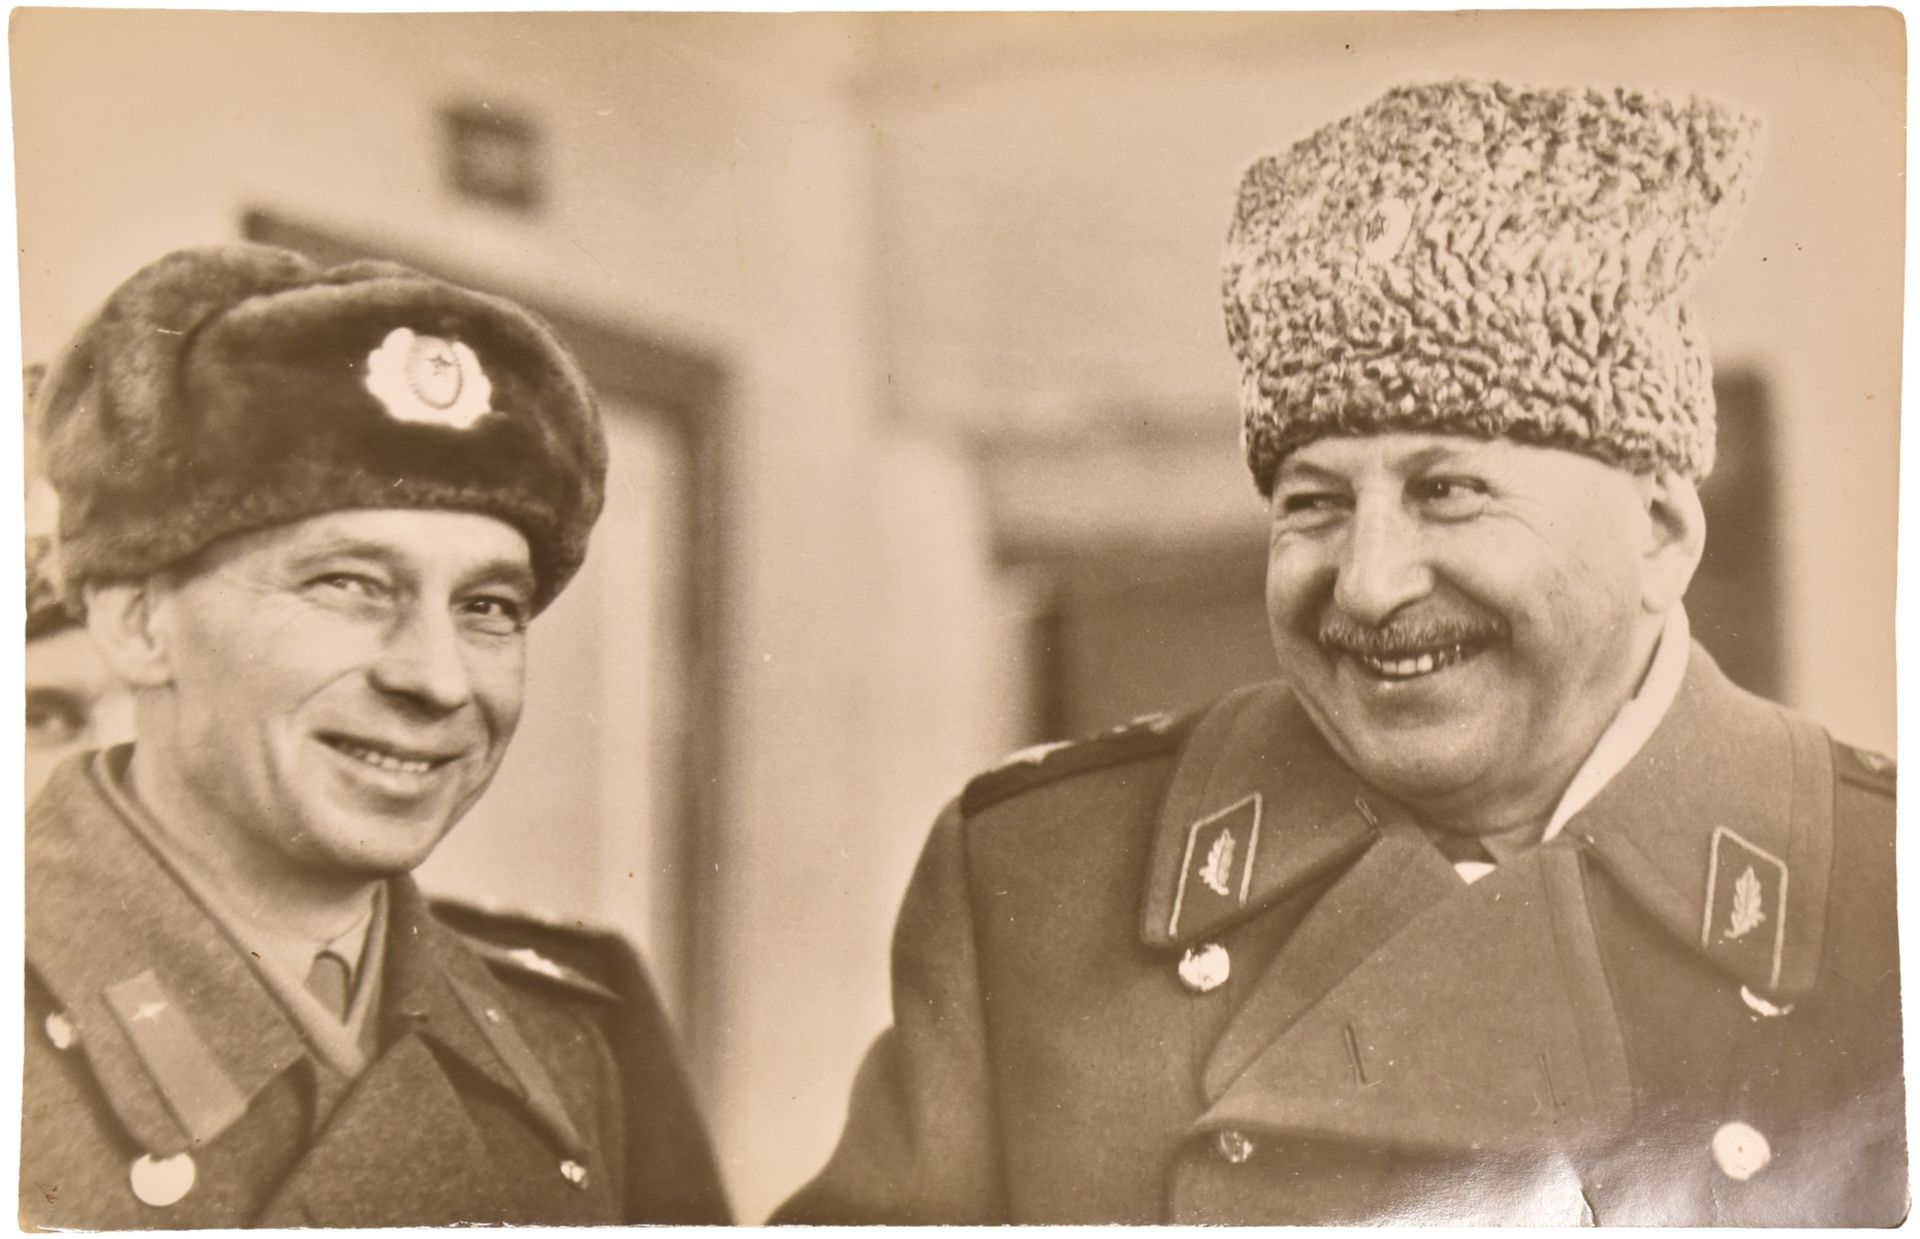 [Soviet] The Marshal Ivan Bagramyan. Circa 1950.